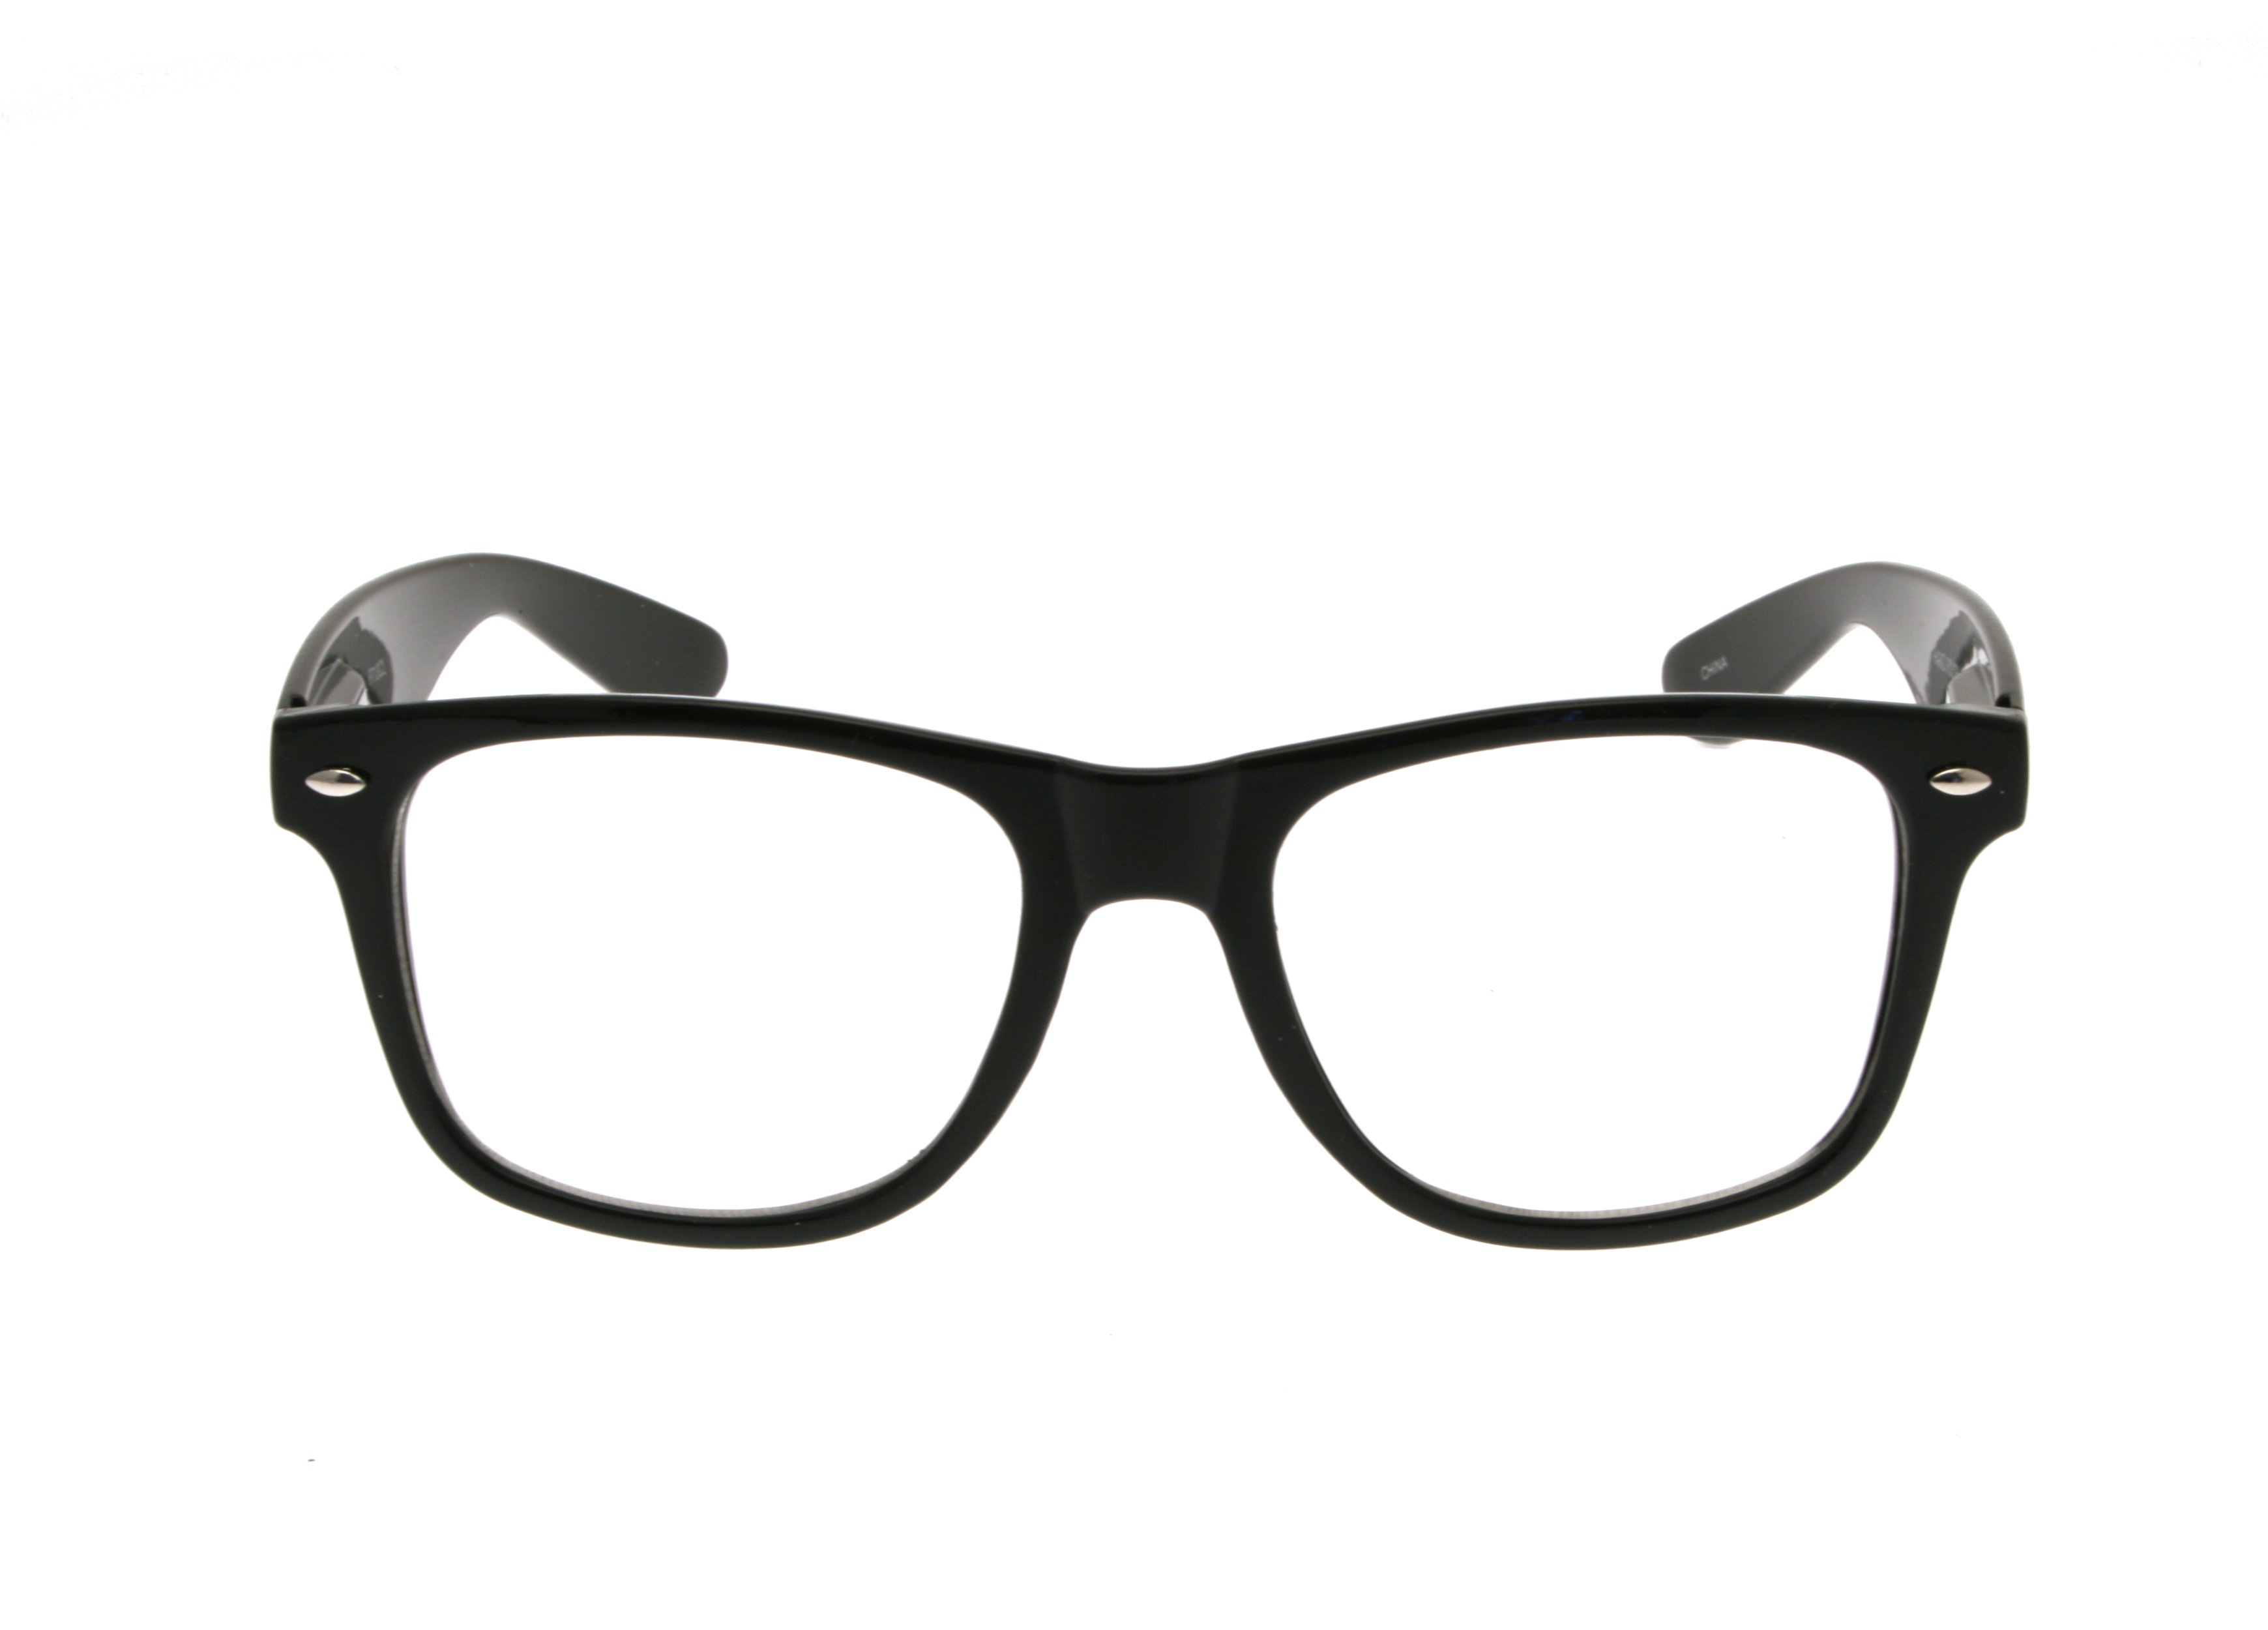 Geek eye glasses clipart